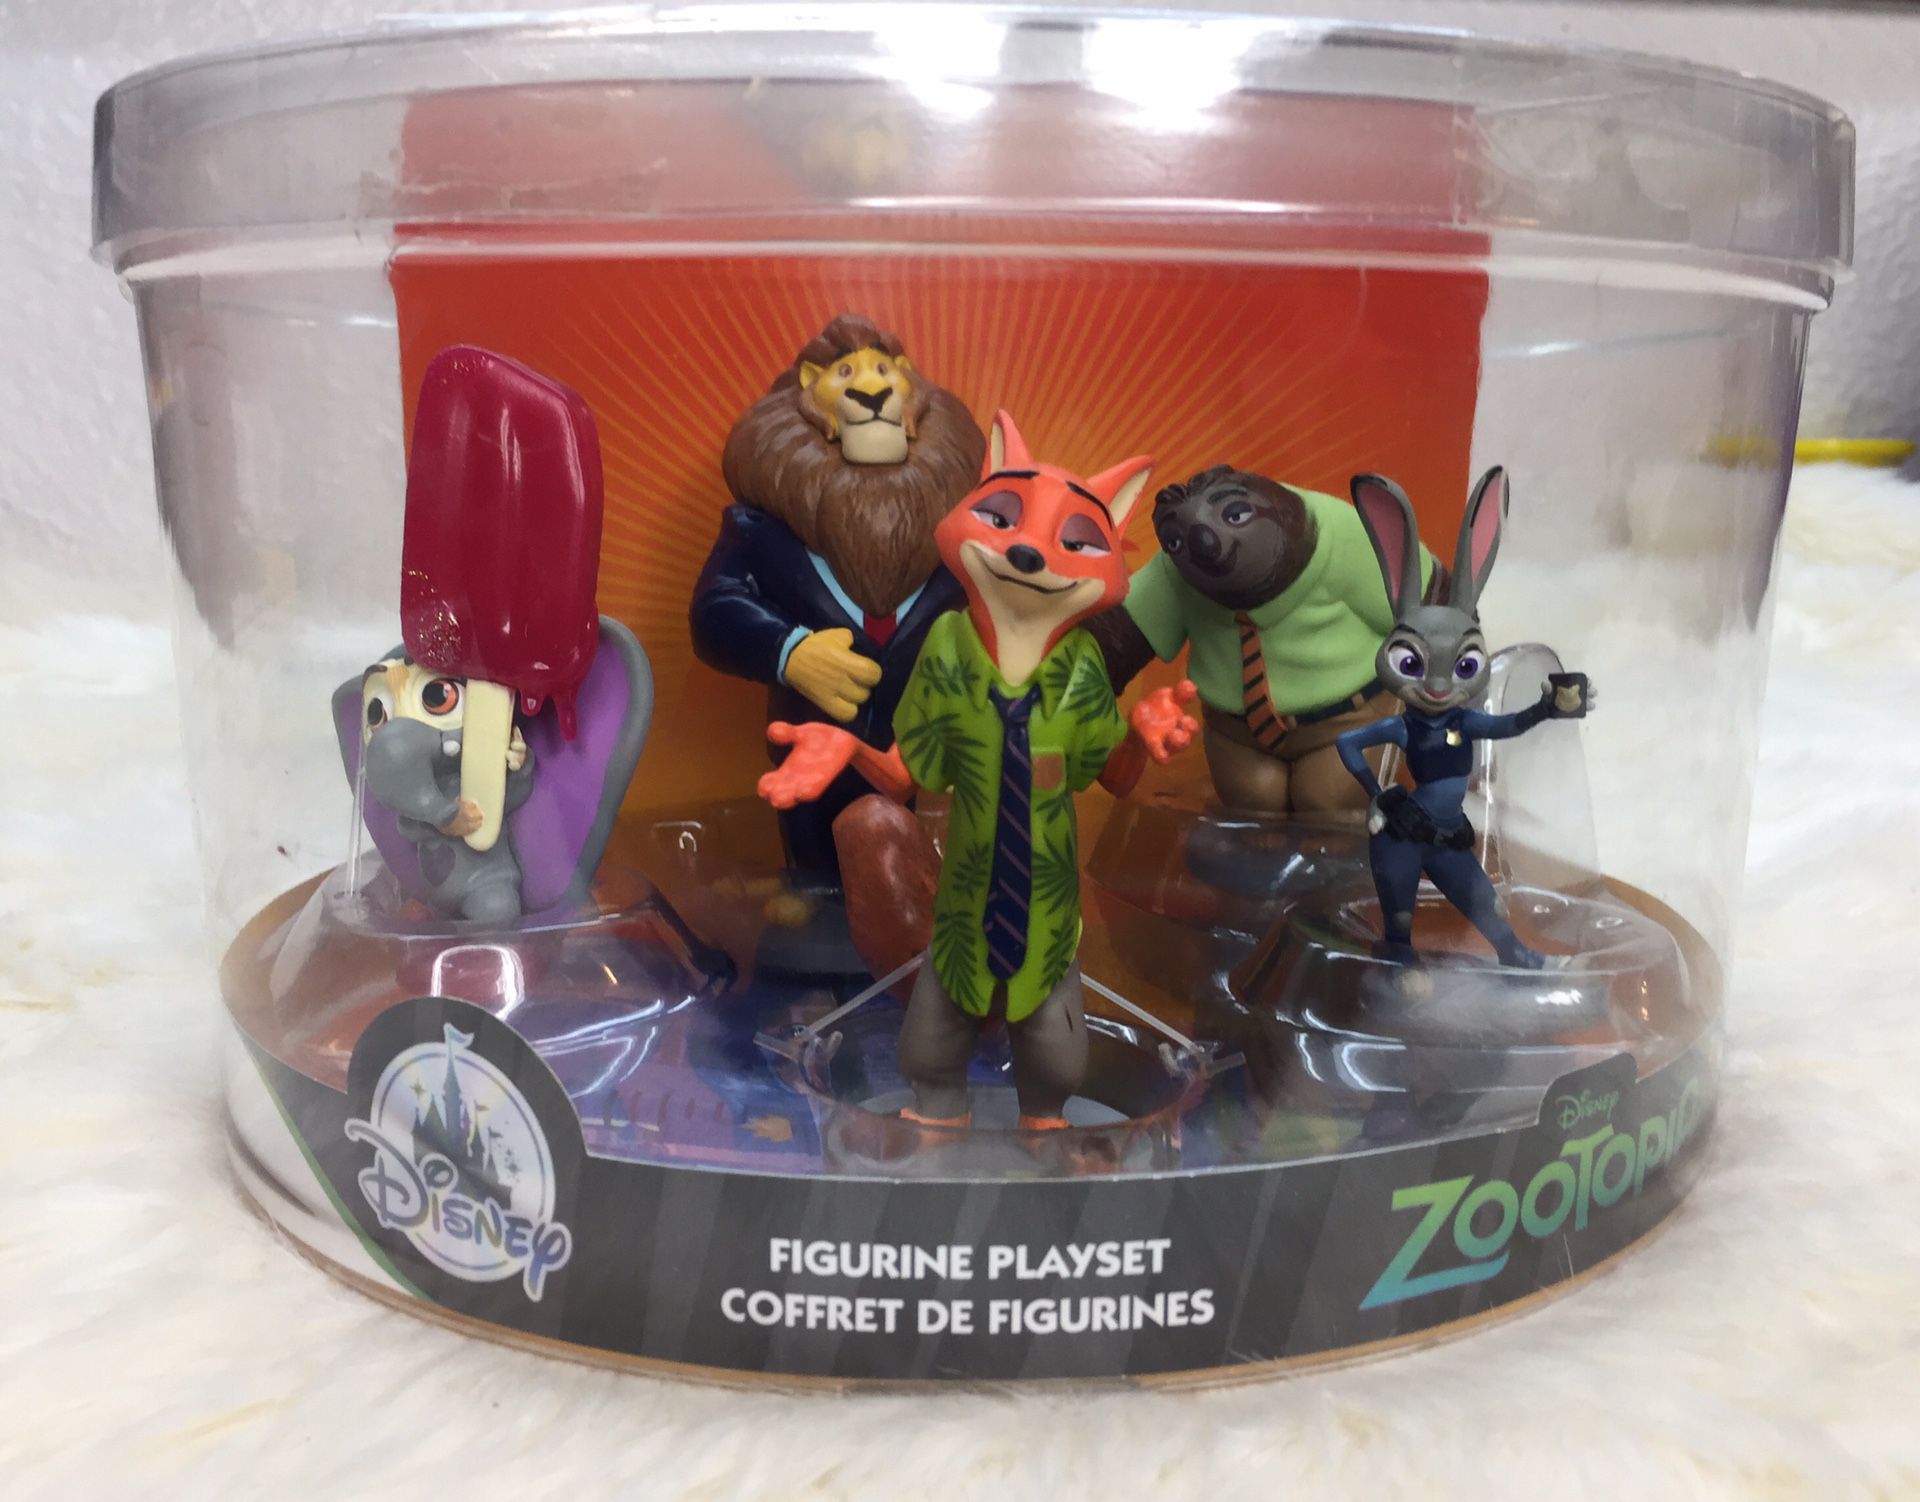 Zootopia toy collectibles